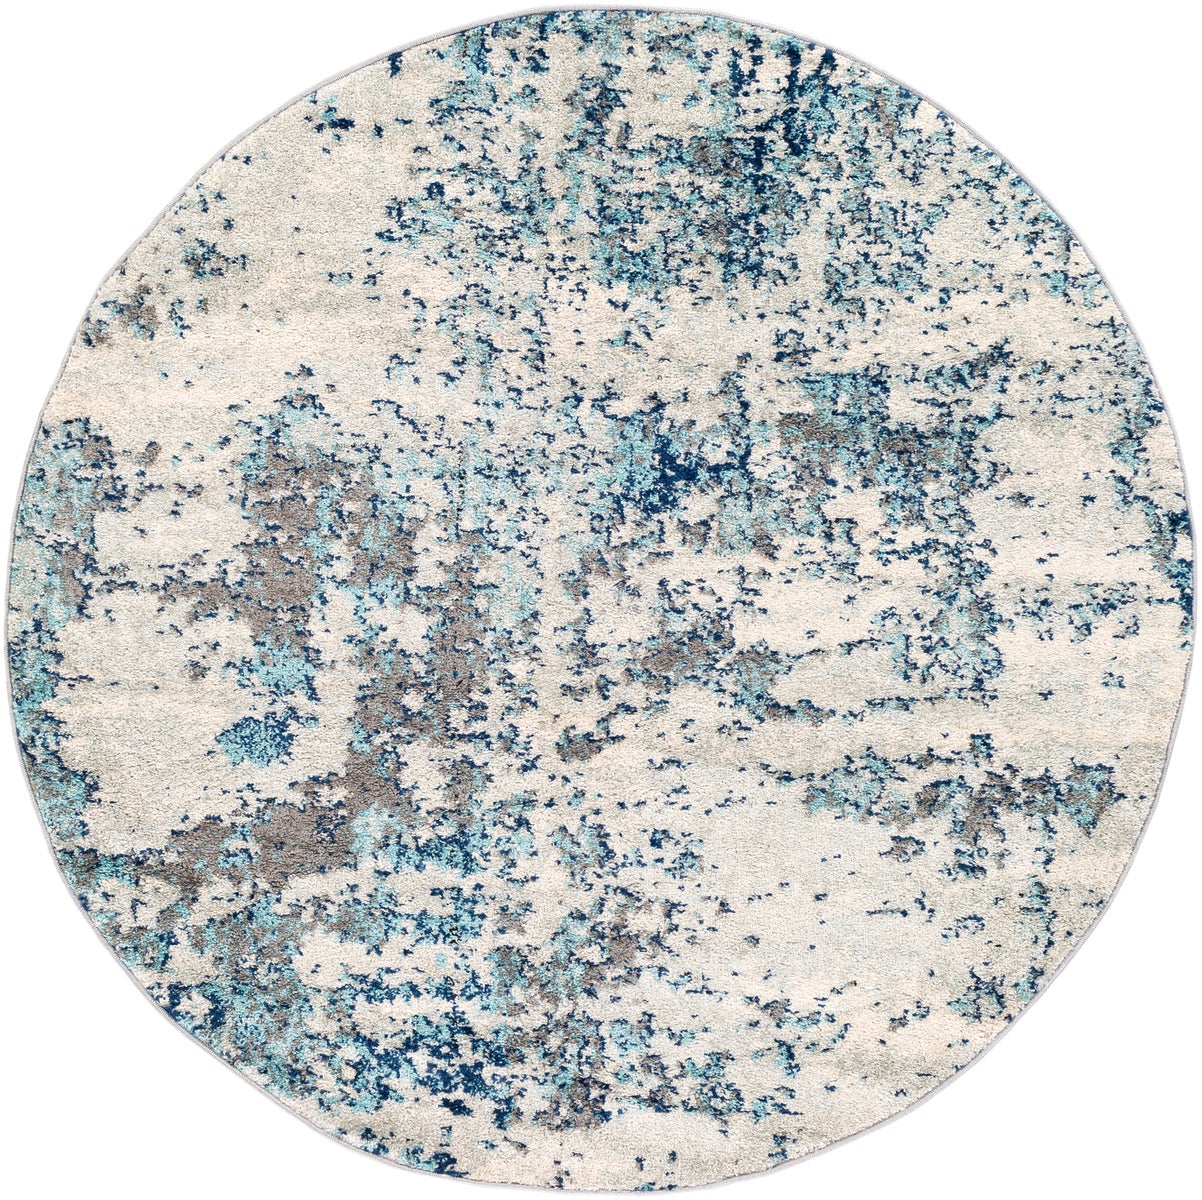 Abstrakt Moderner Runder Teppich - Blau/Grau/Weiß - Ø 160cm - SARAH